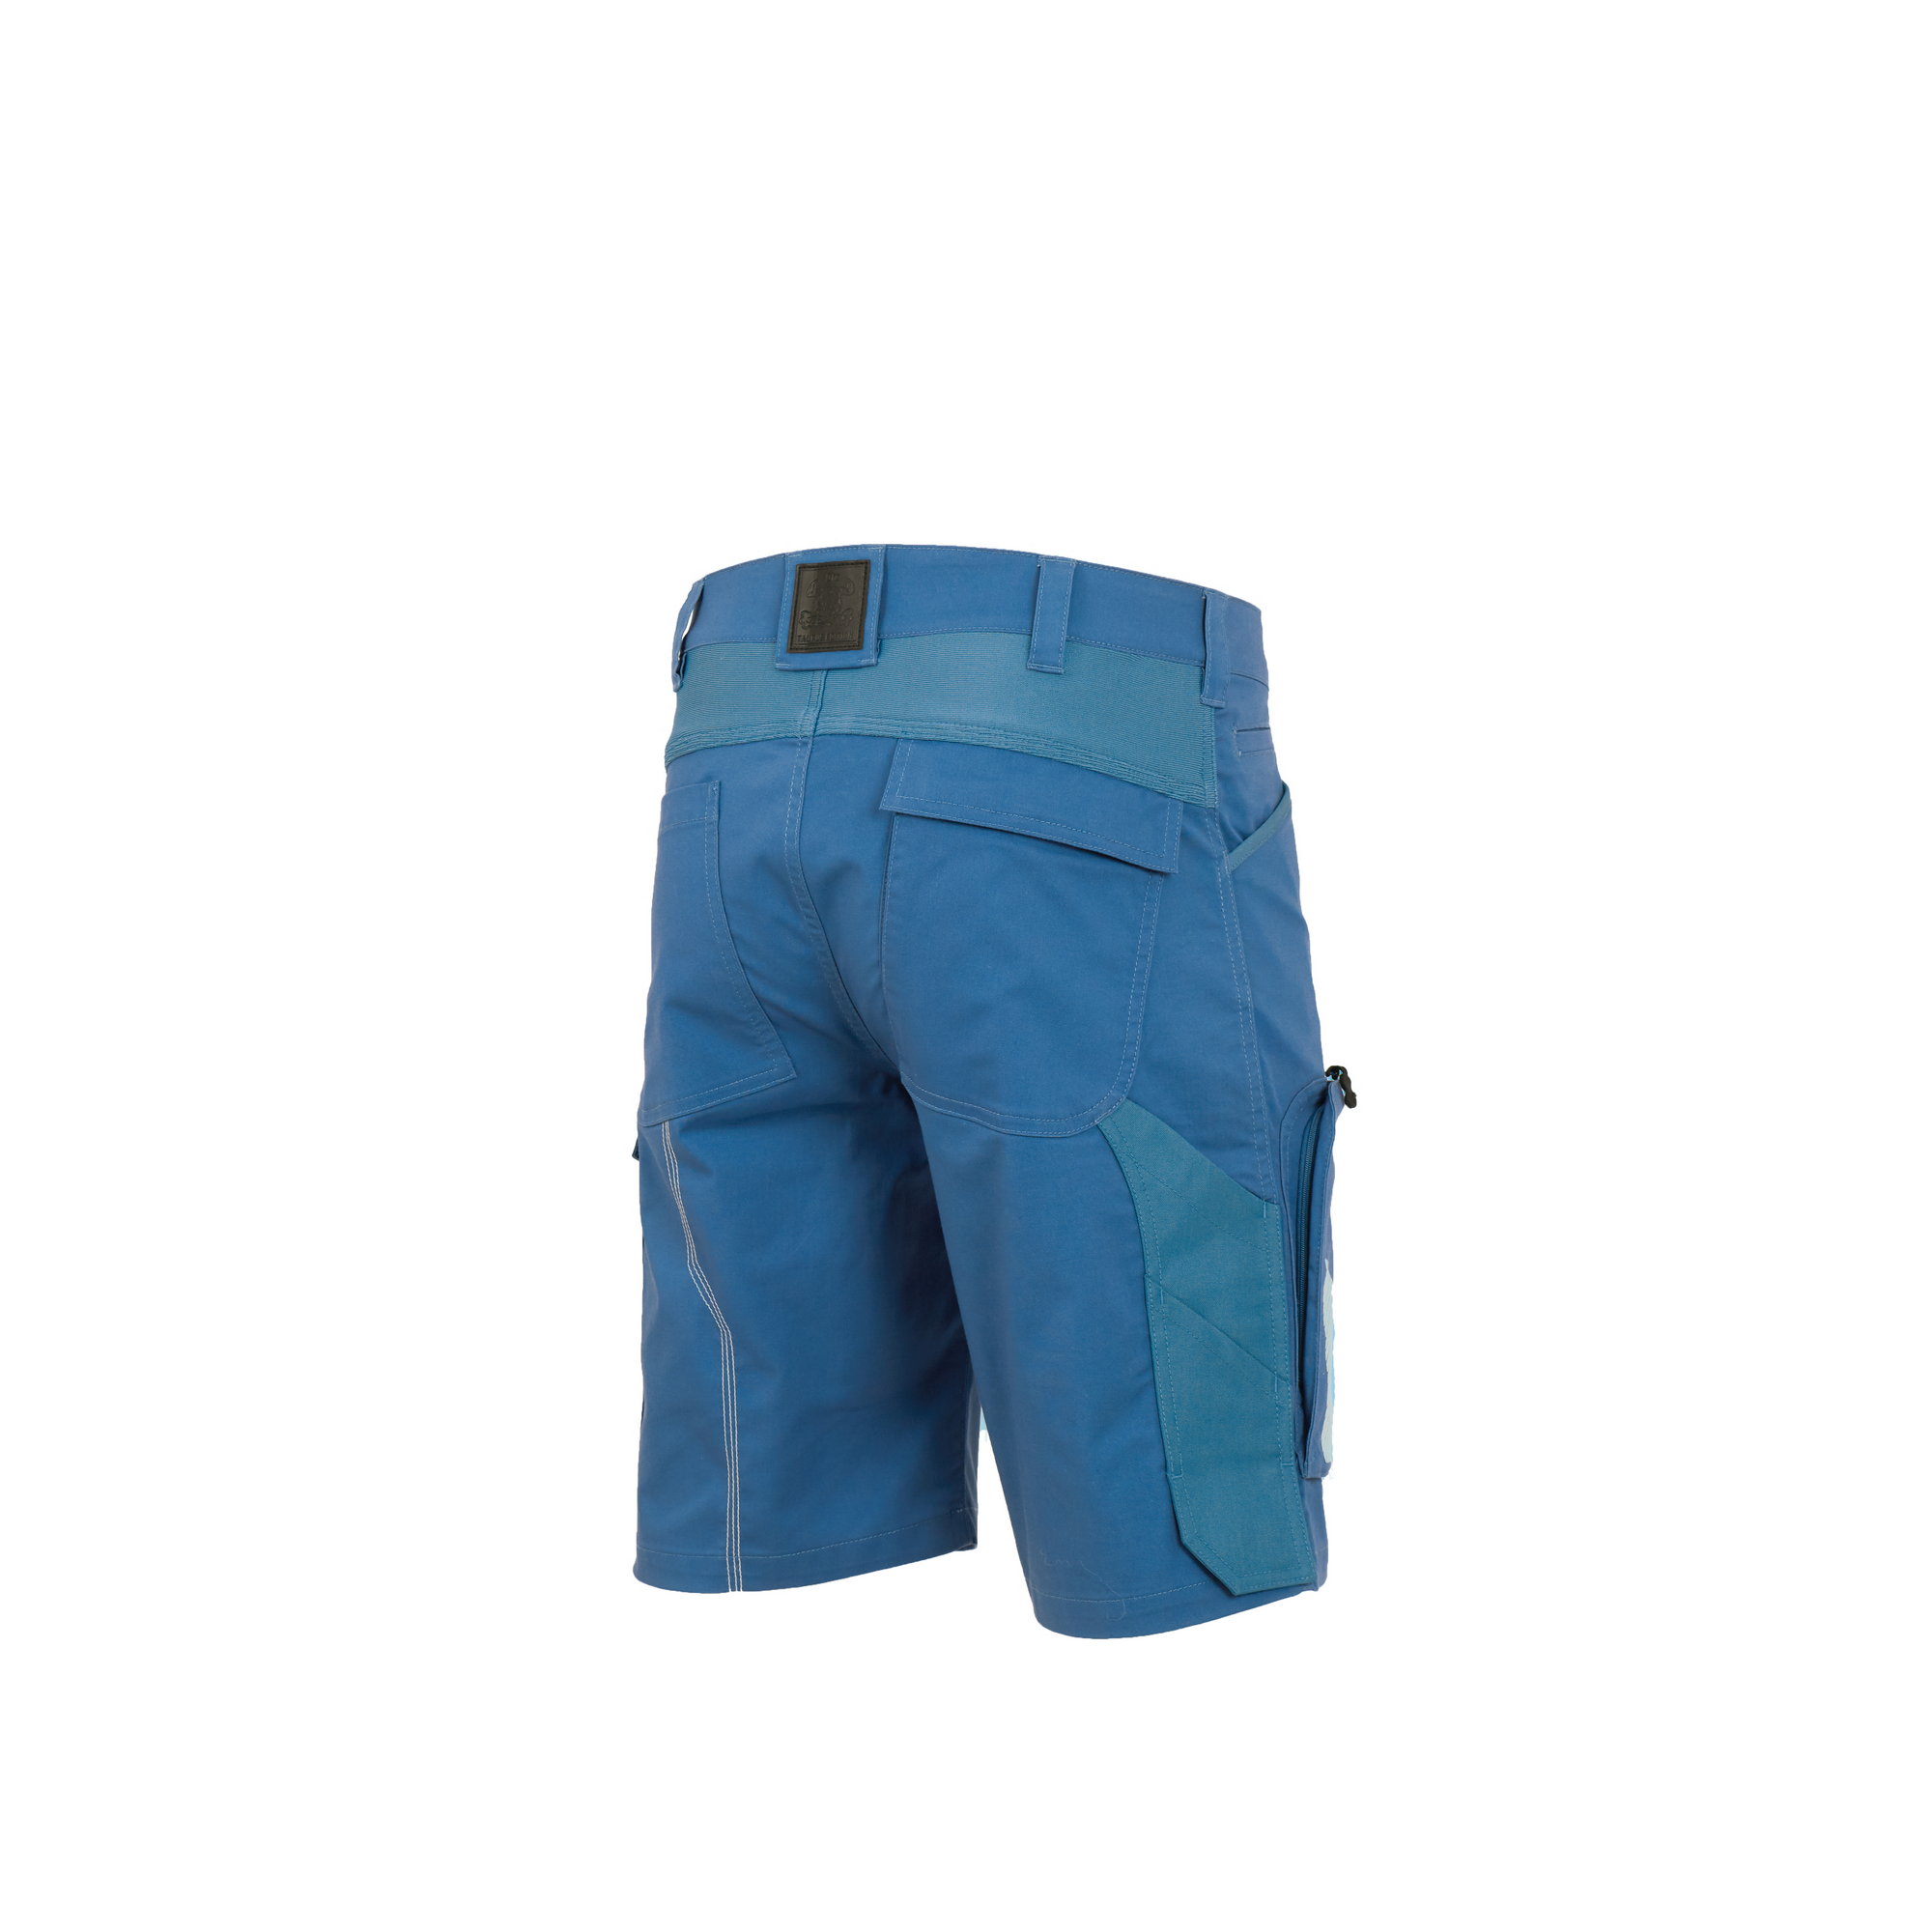 Shorts 'Taurus' blau 50 + product picture